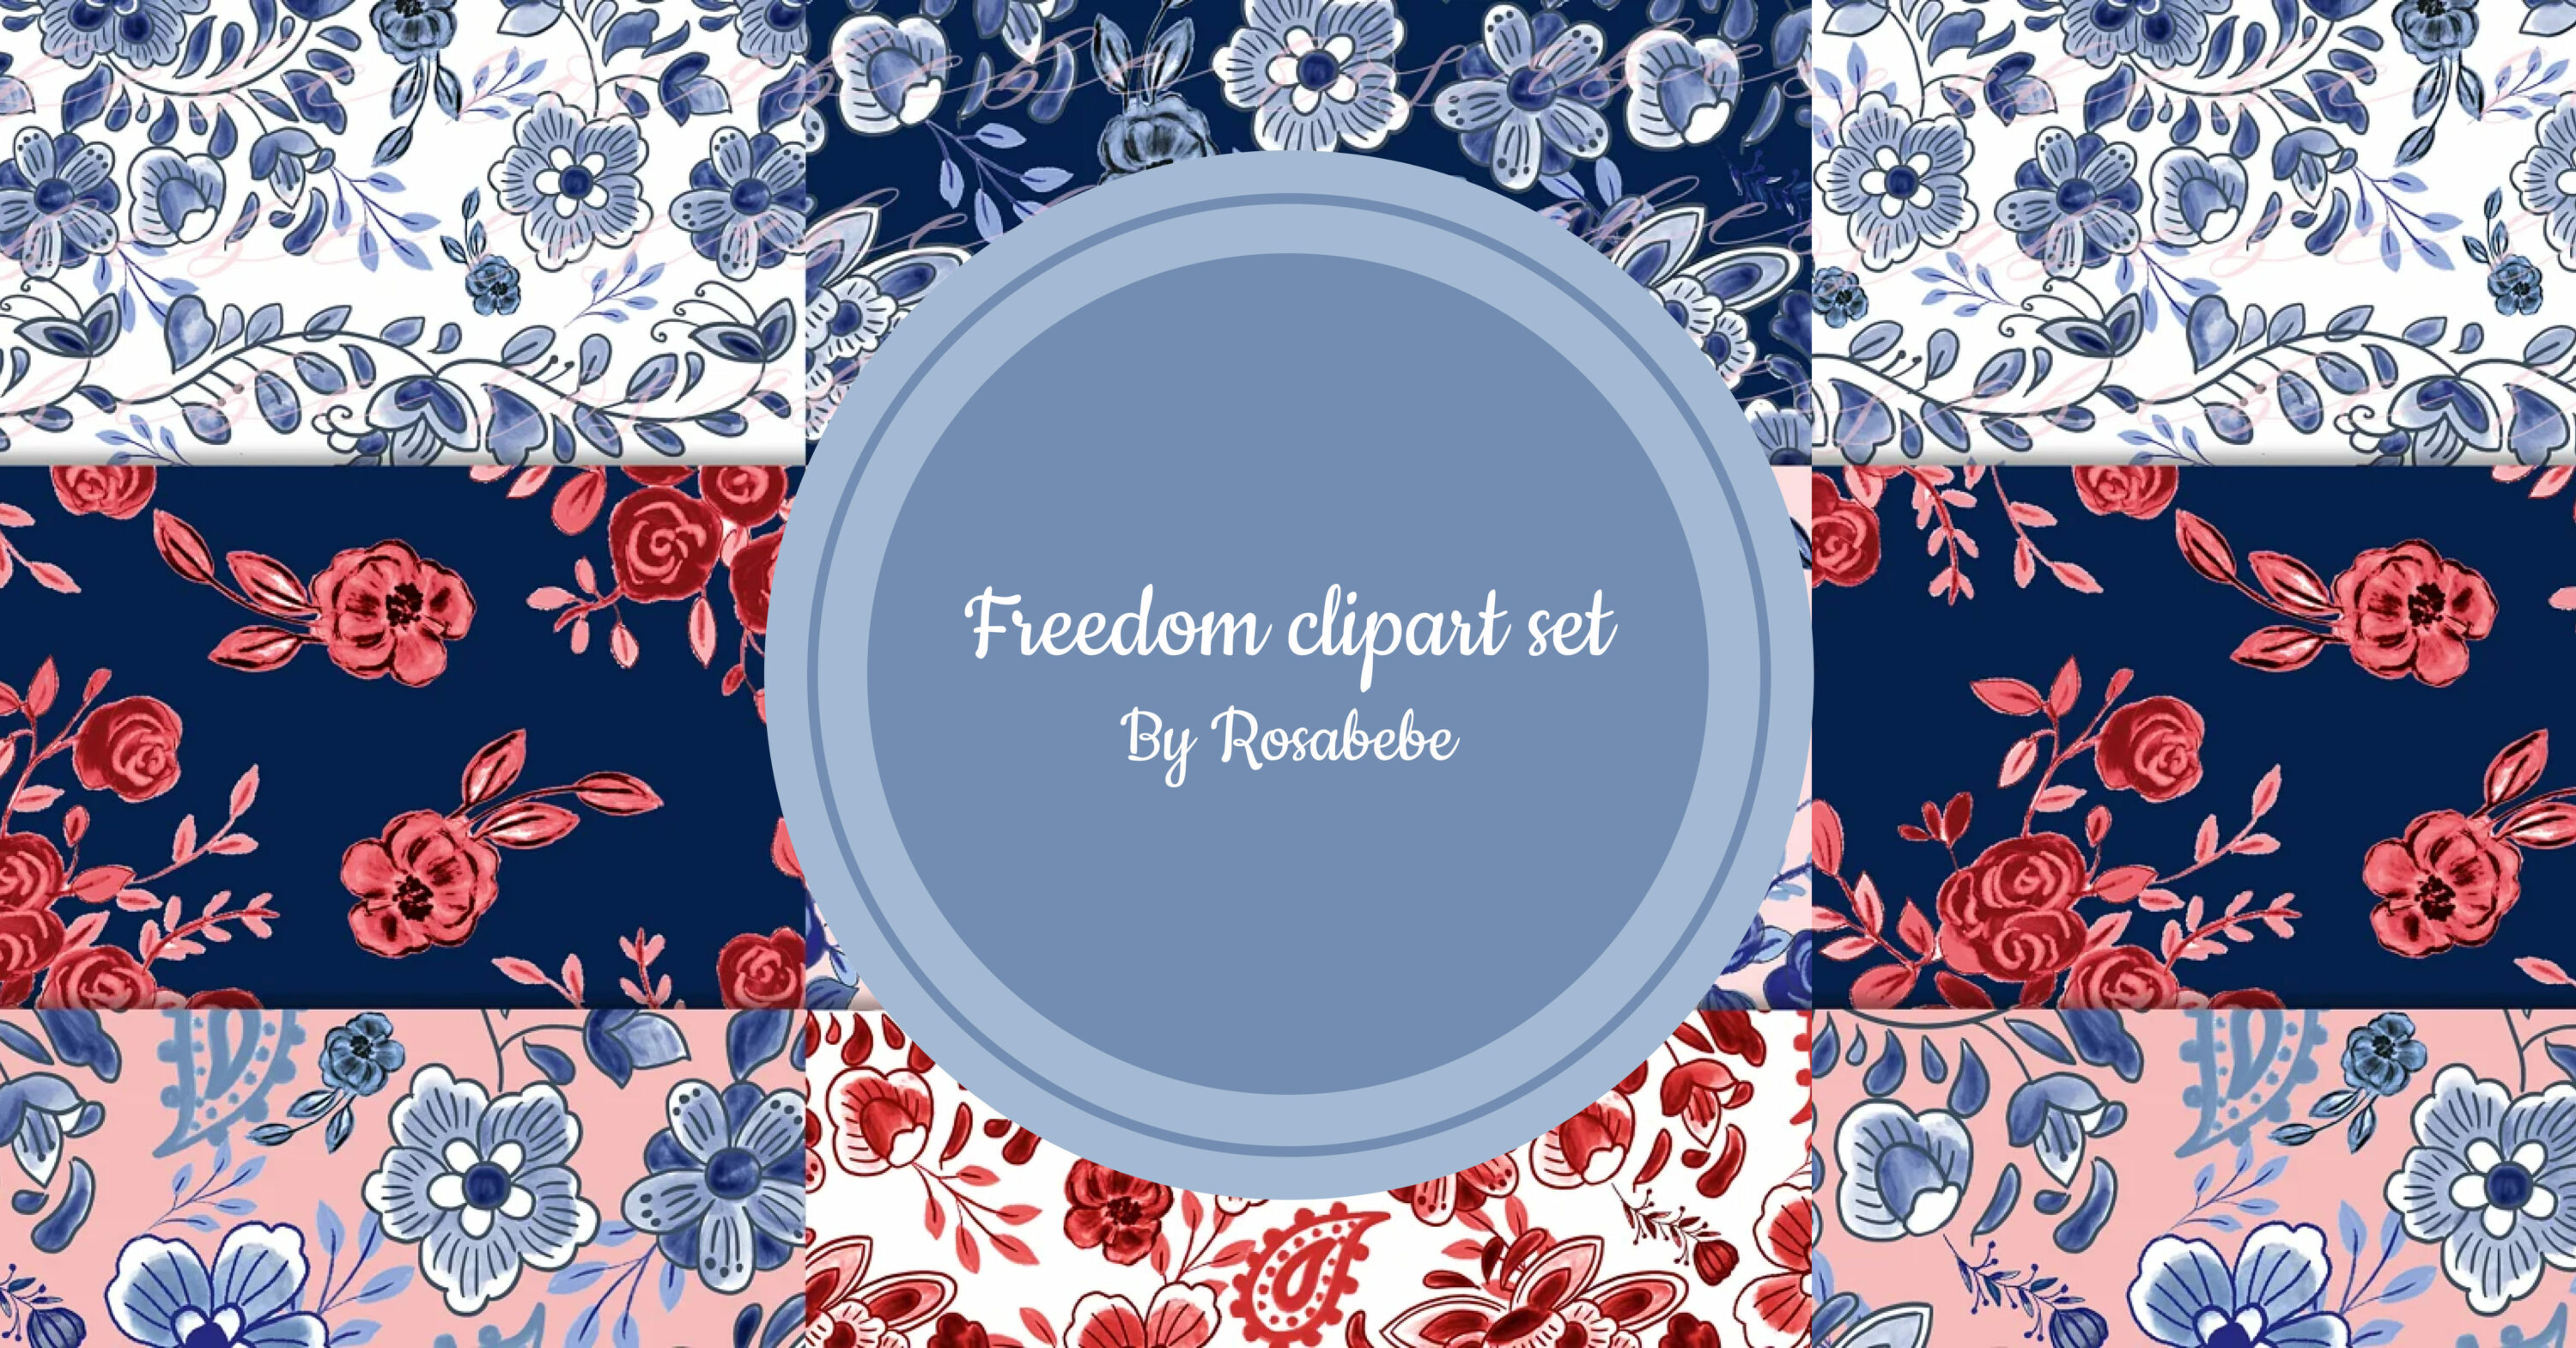 Freedom Clipart Set facebook image.